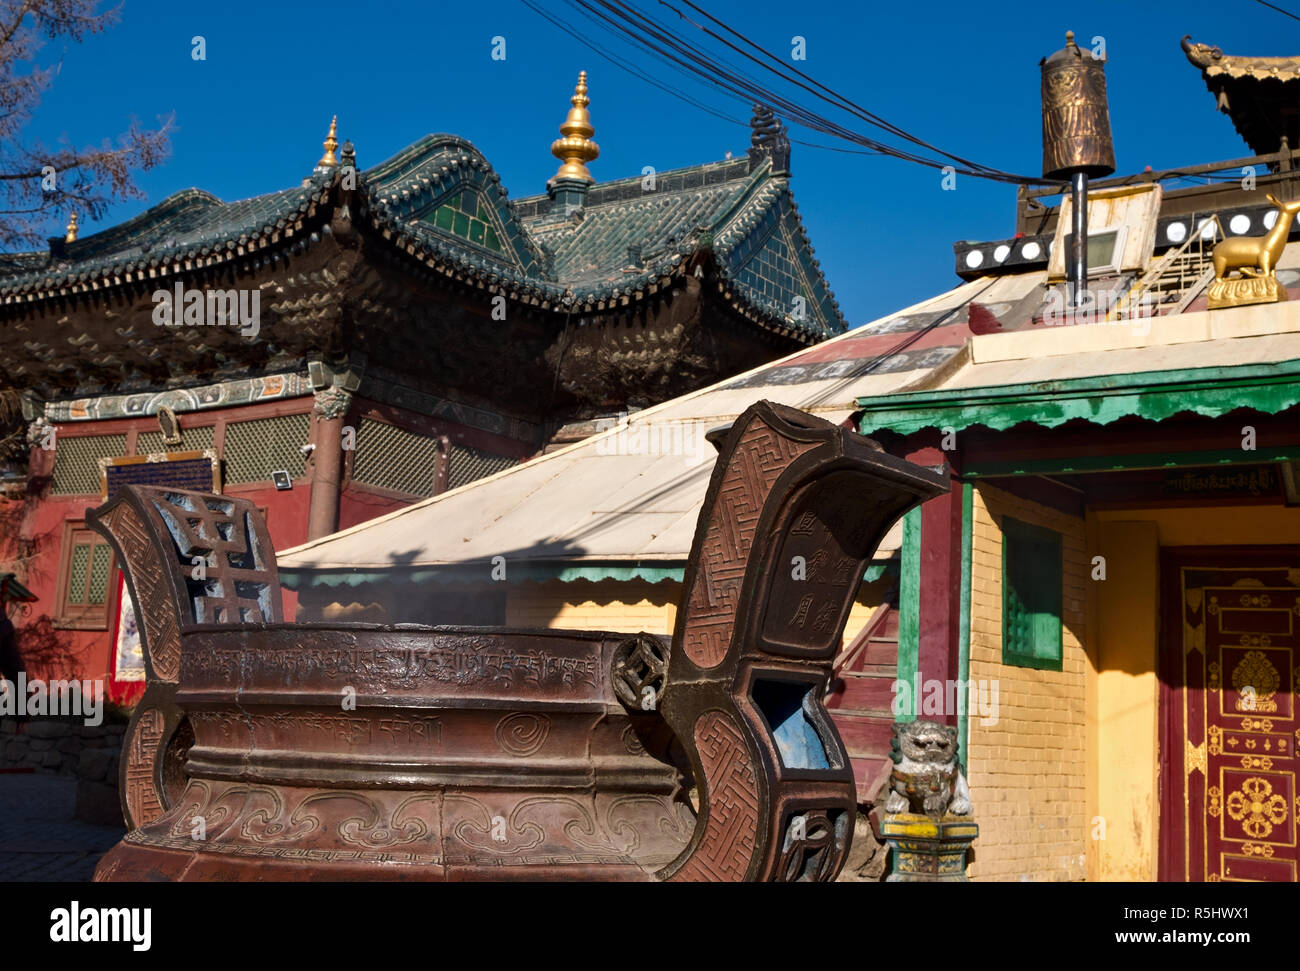 Aroma bote en el monasterio Gandantegchinlen en Ulaanbaatar, Mongolia Foto de stock